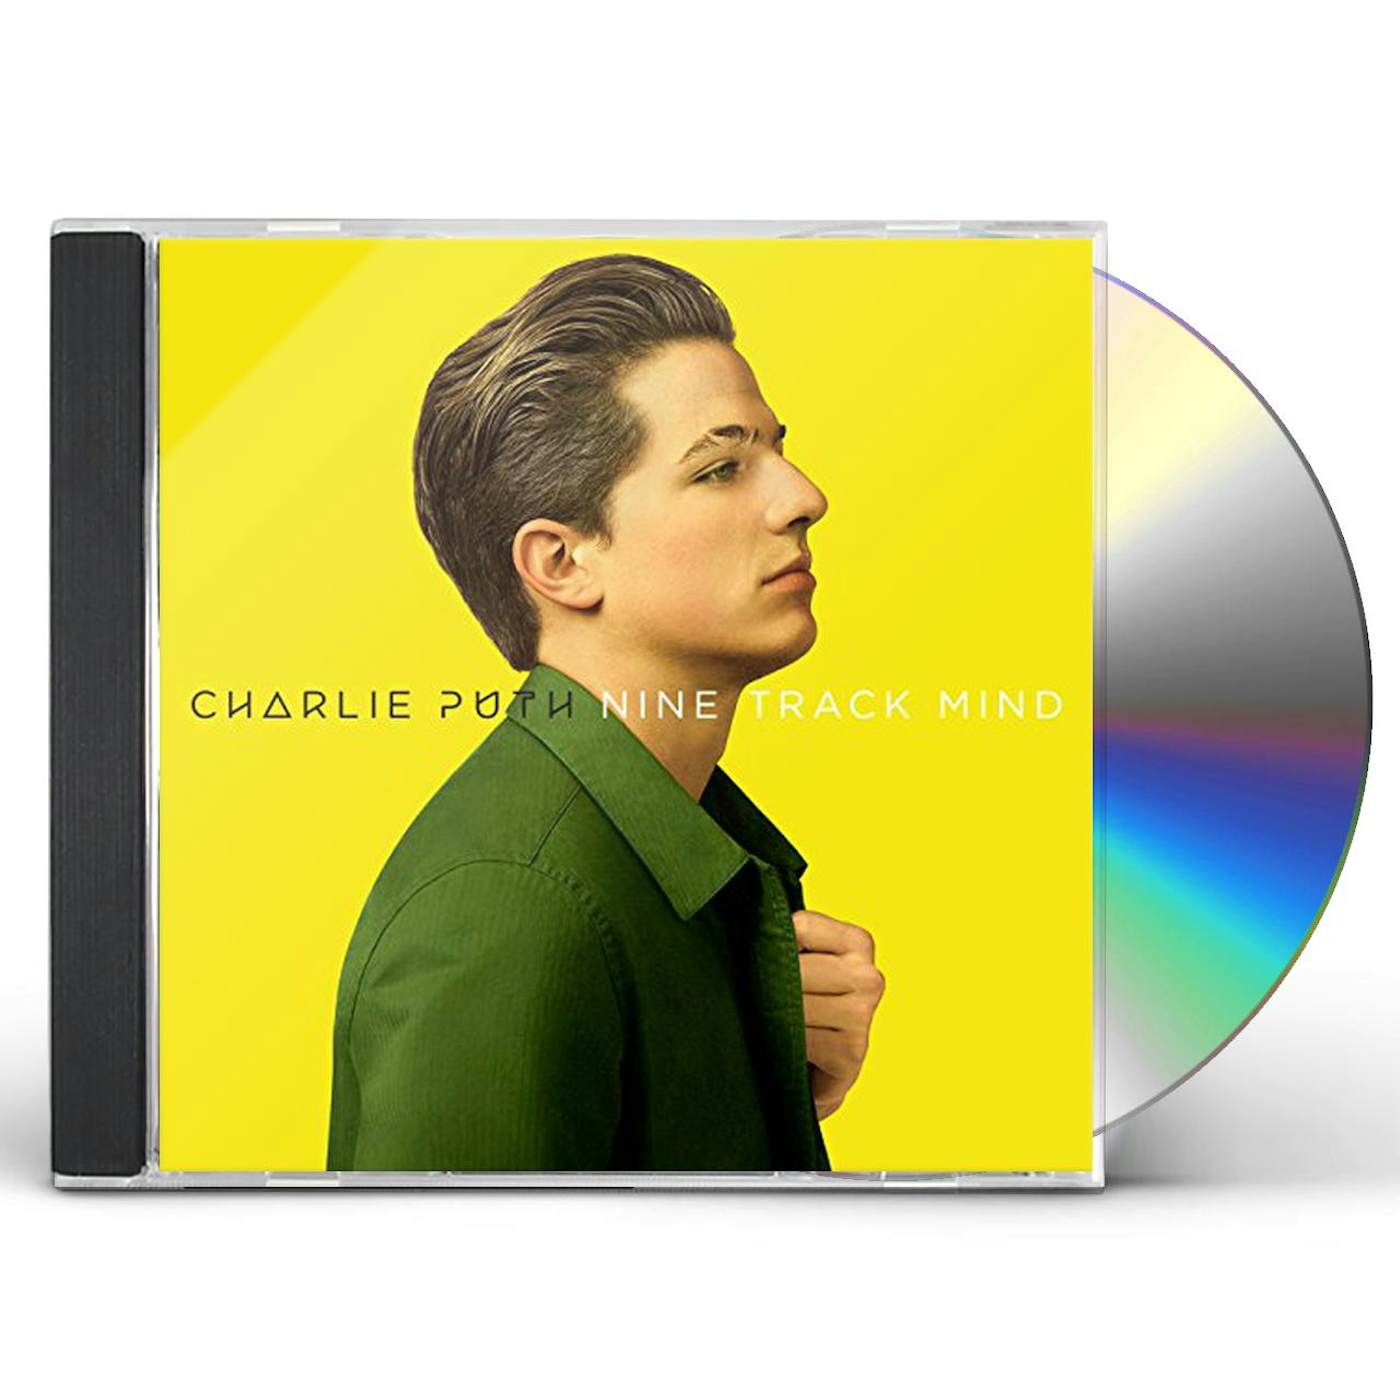 Charlie Puth NINE TRACK MIND CD